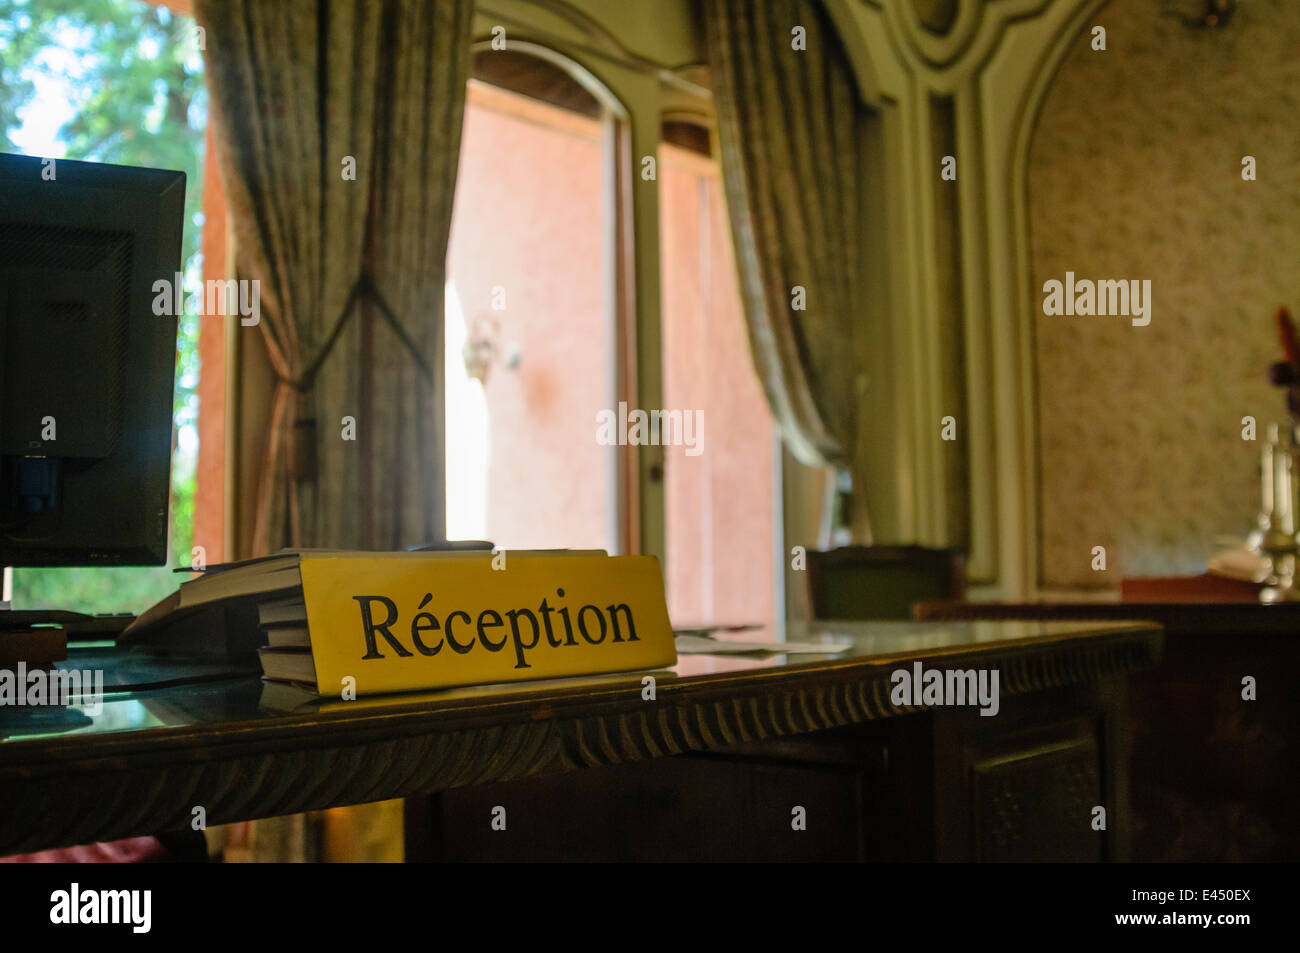 Hotel Rezeption mit Schild "Réception' Stockfoto